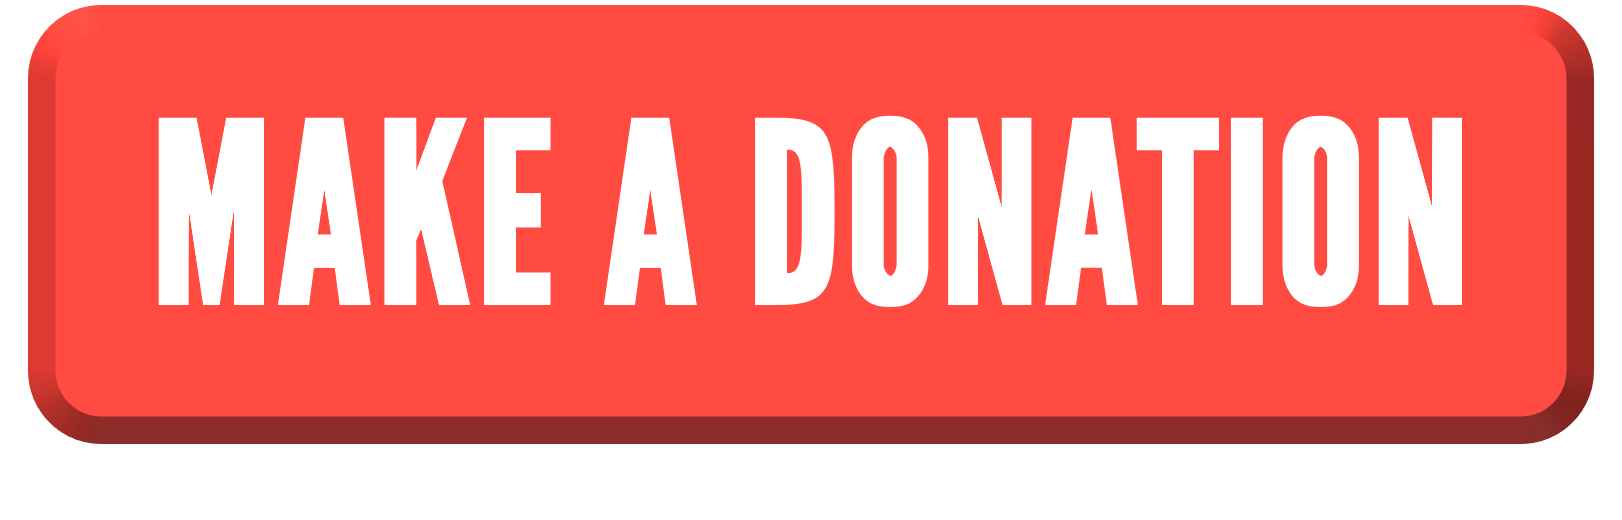 Make a donation button